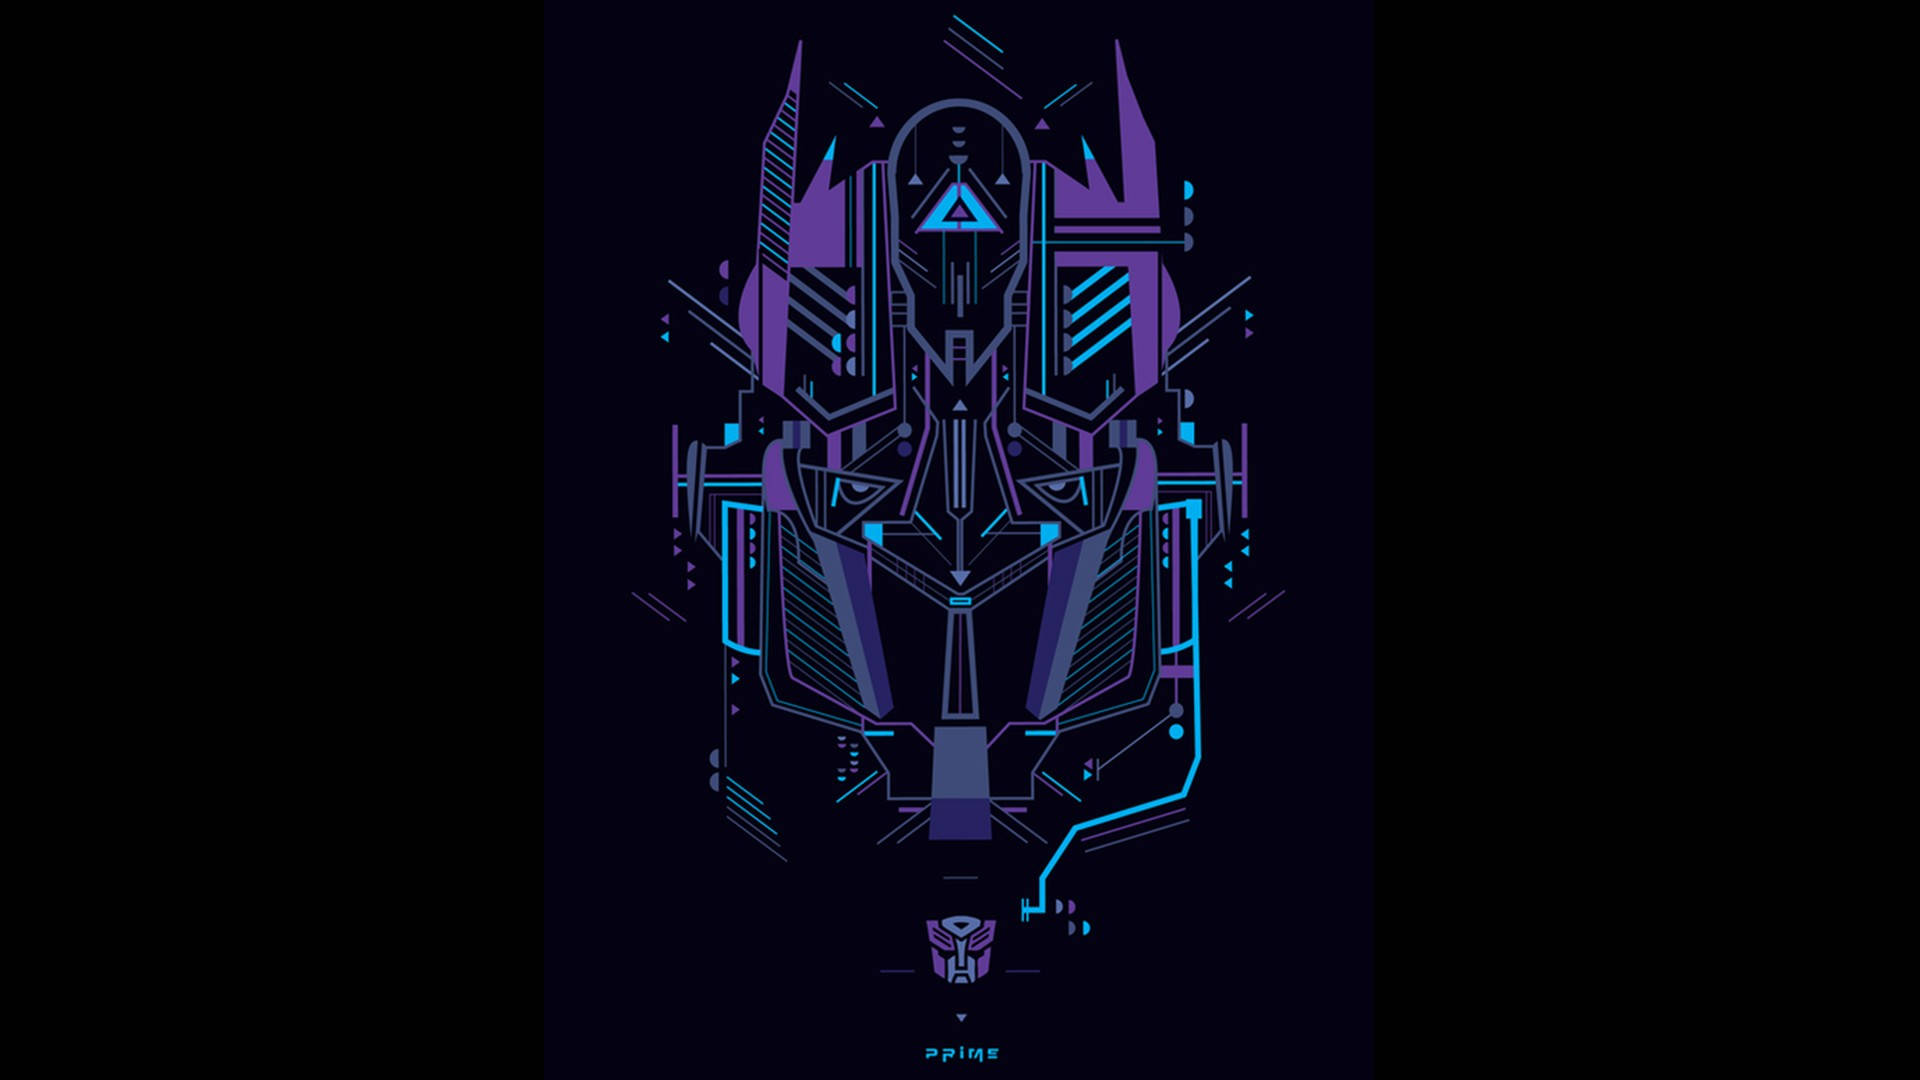 Transformers Autobots Logo Wallpaper